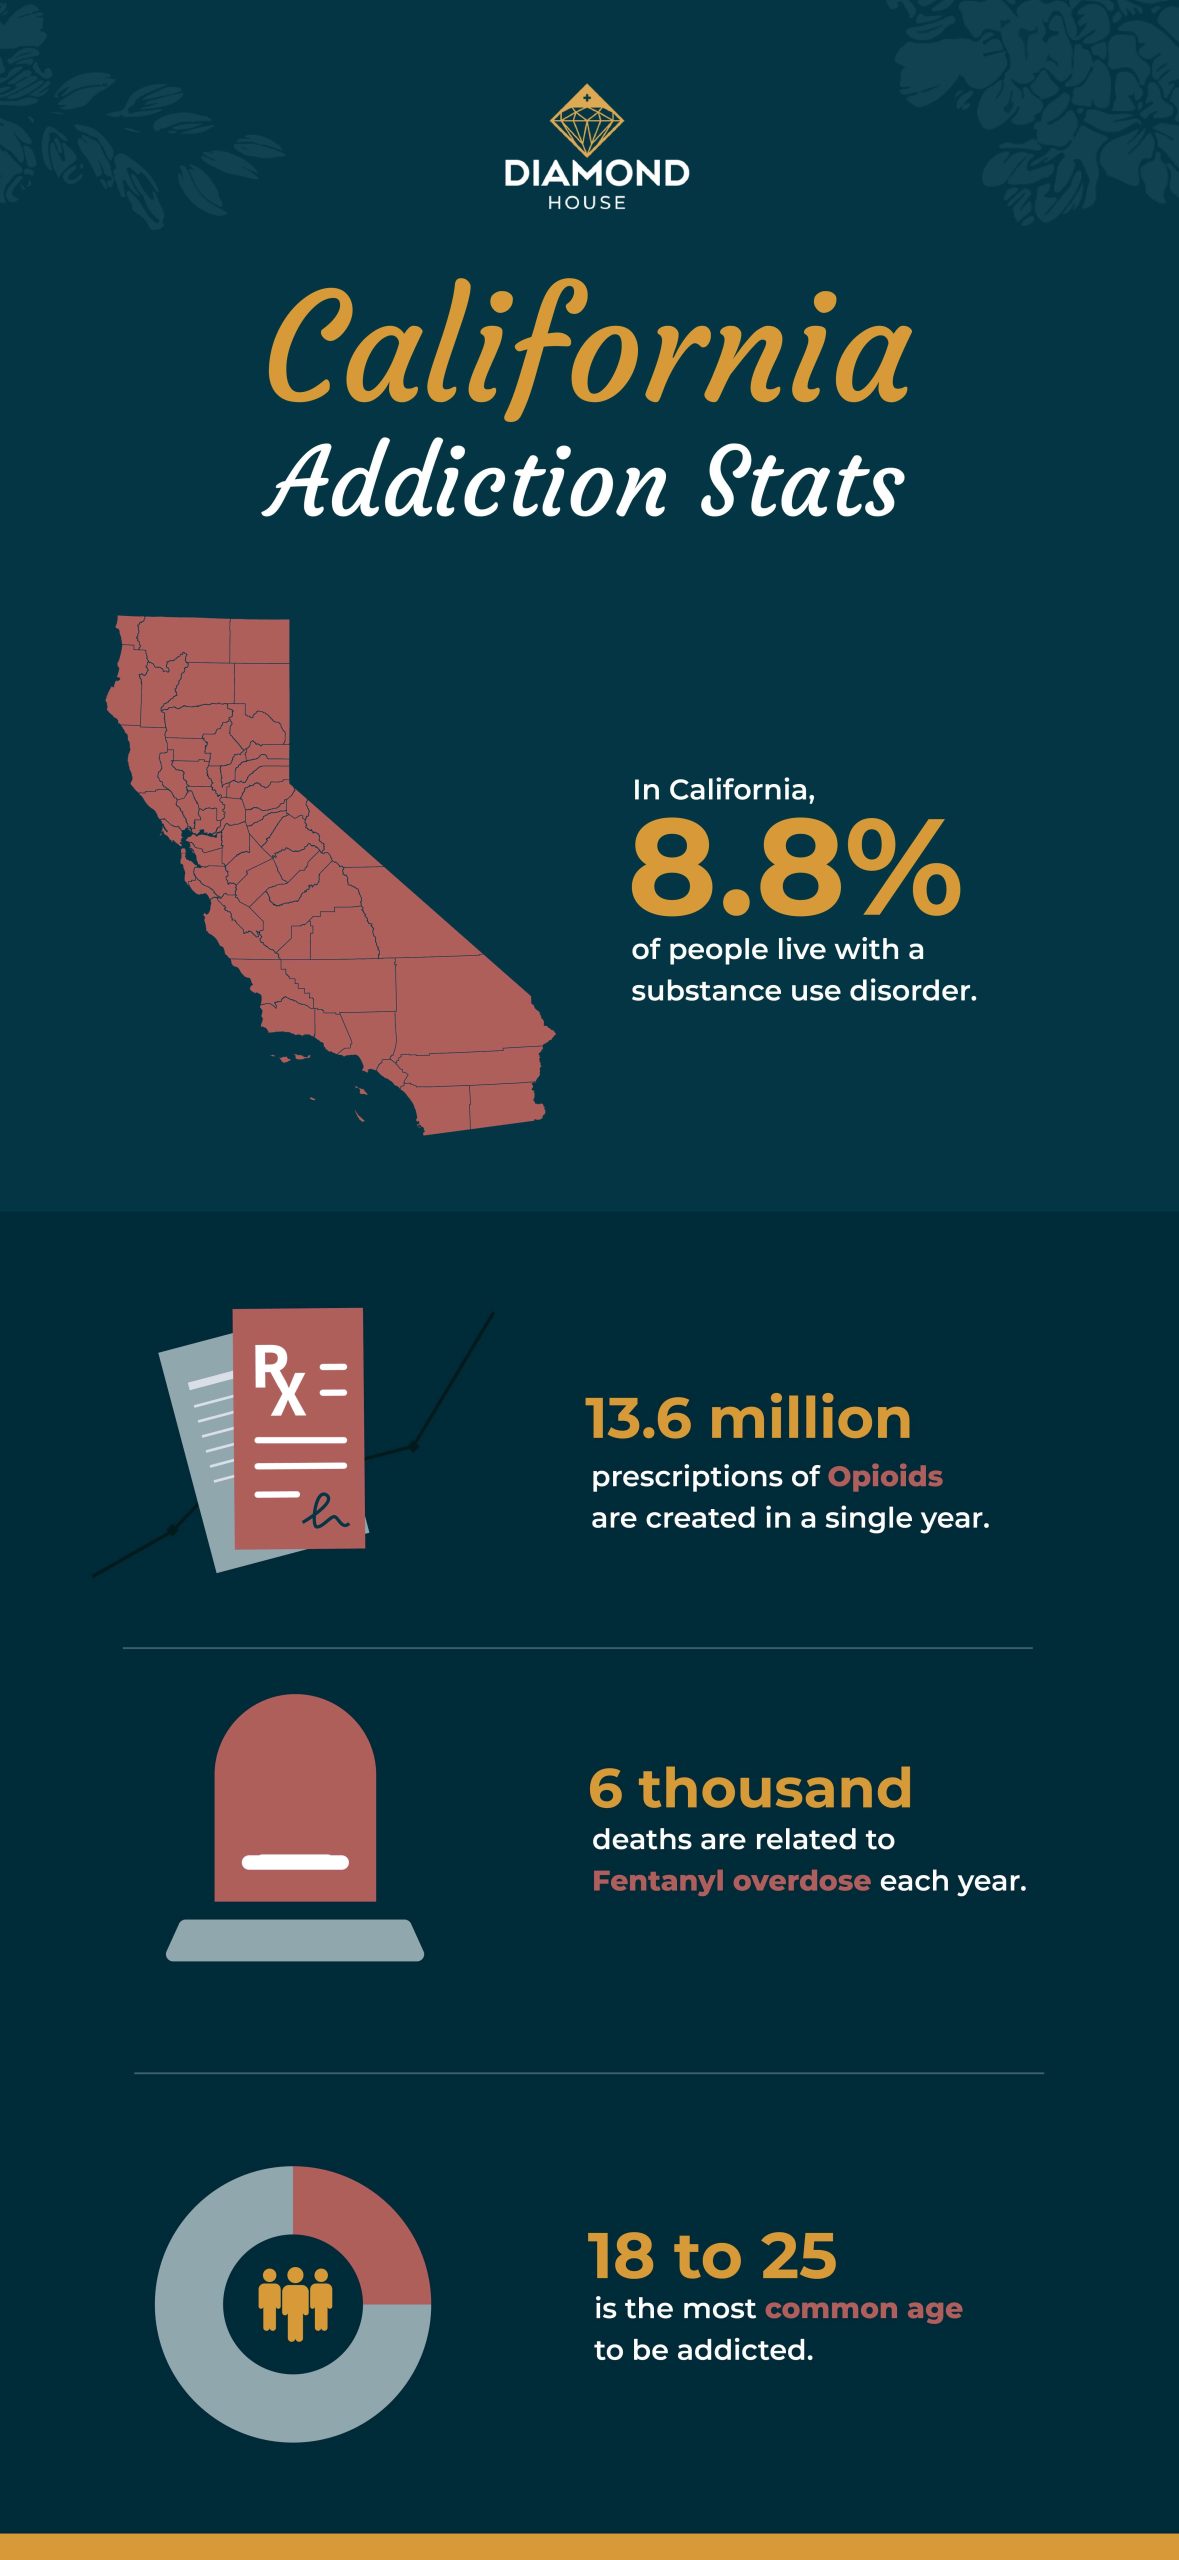 California addiction stats